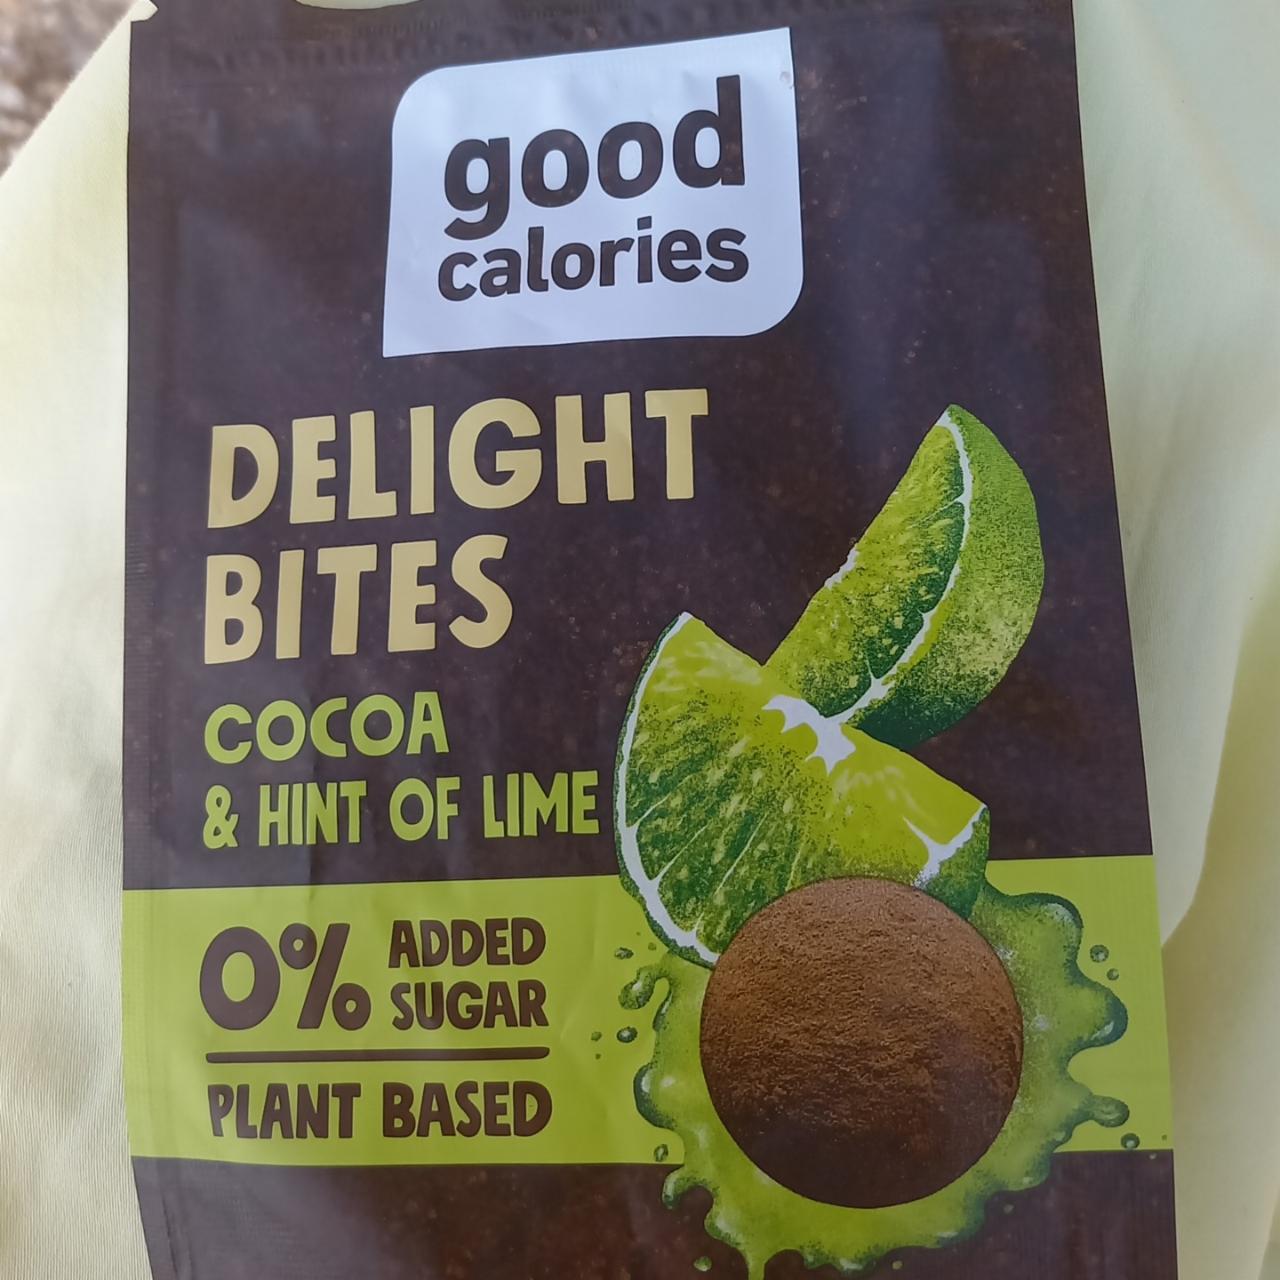 Fotografie - Delight Bites Cocoa & Hint of Lime Good calories